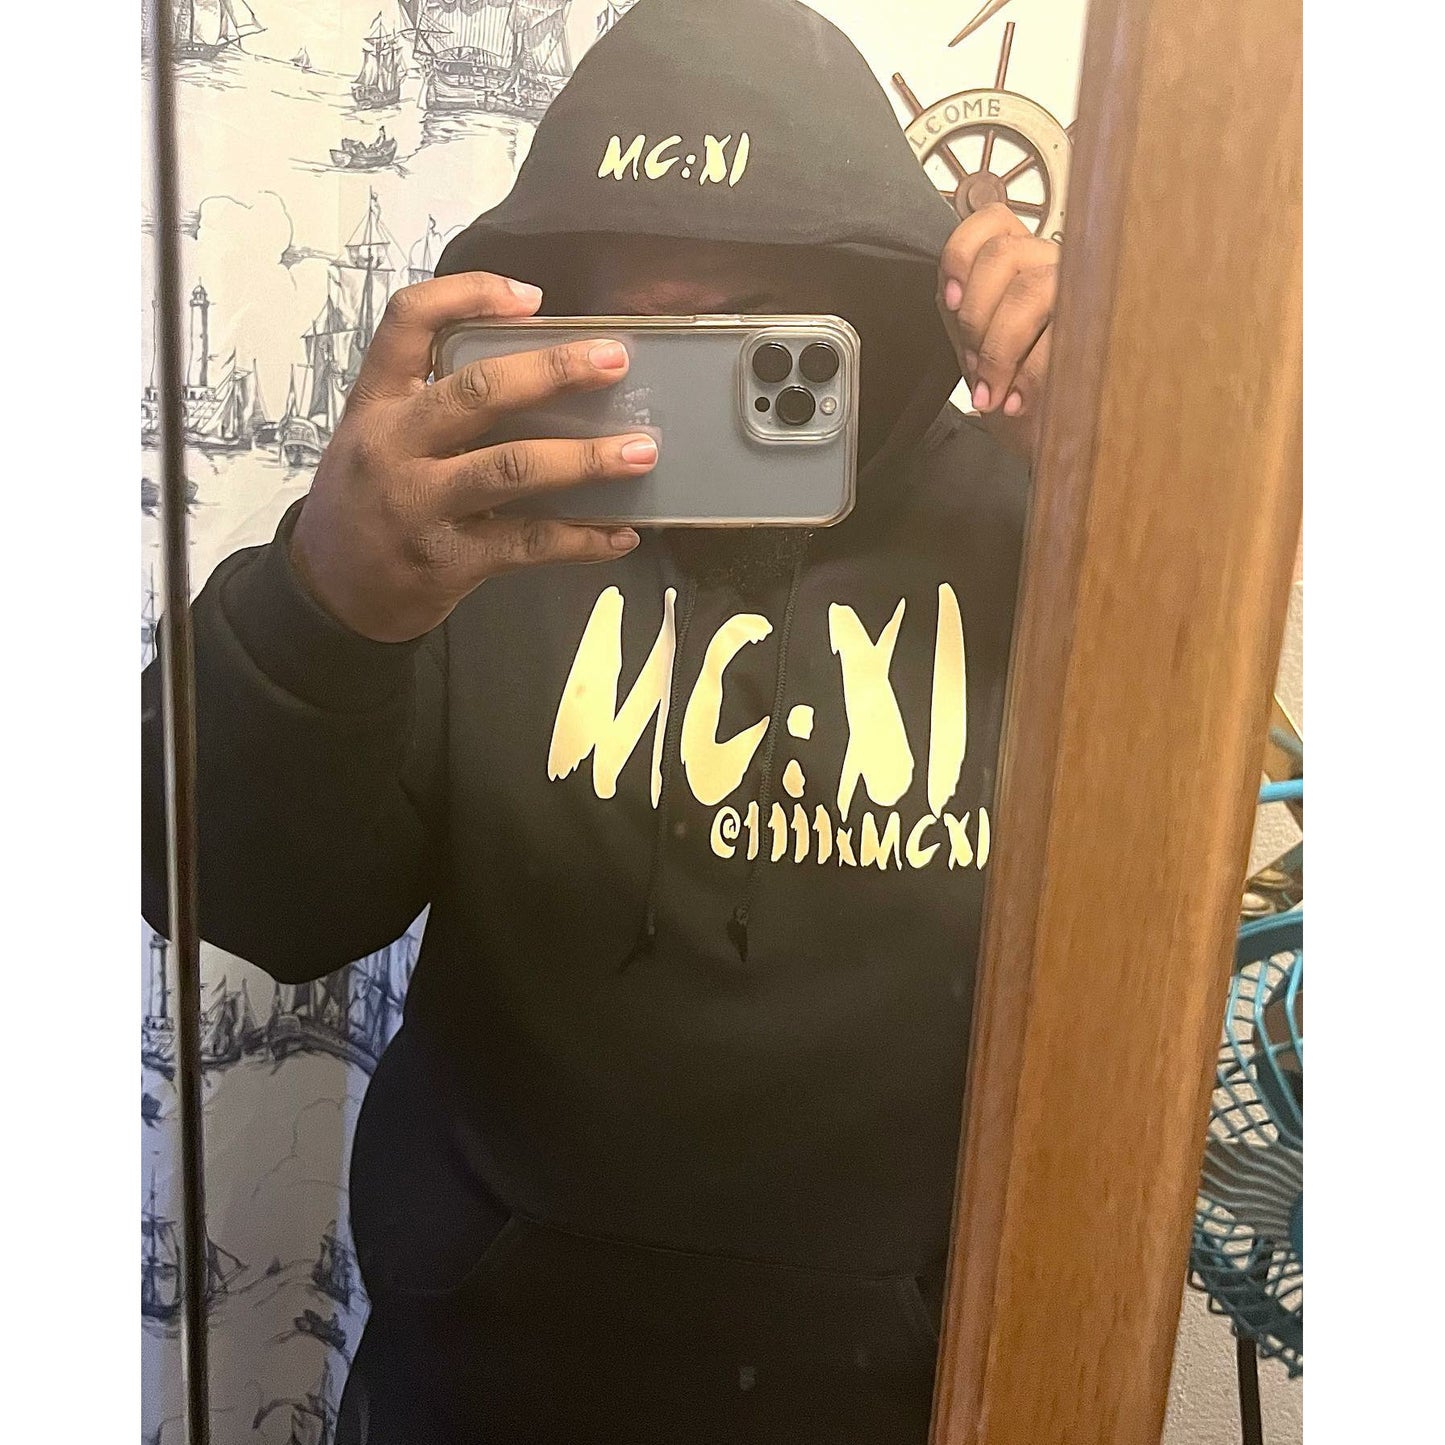 MCXI Classic hoodie